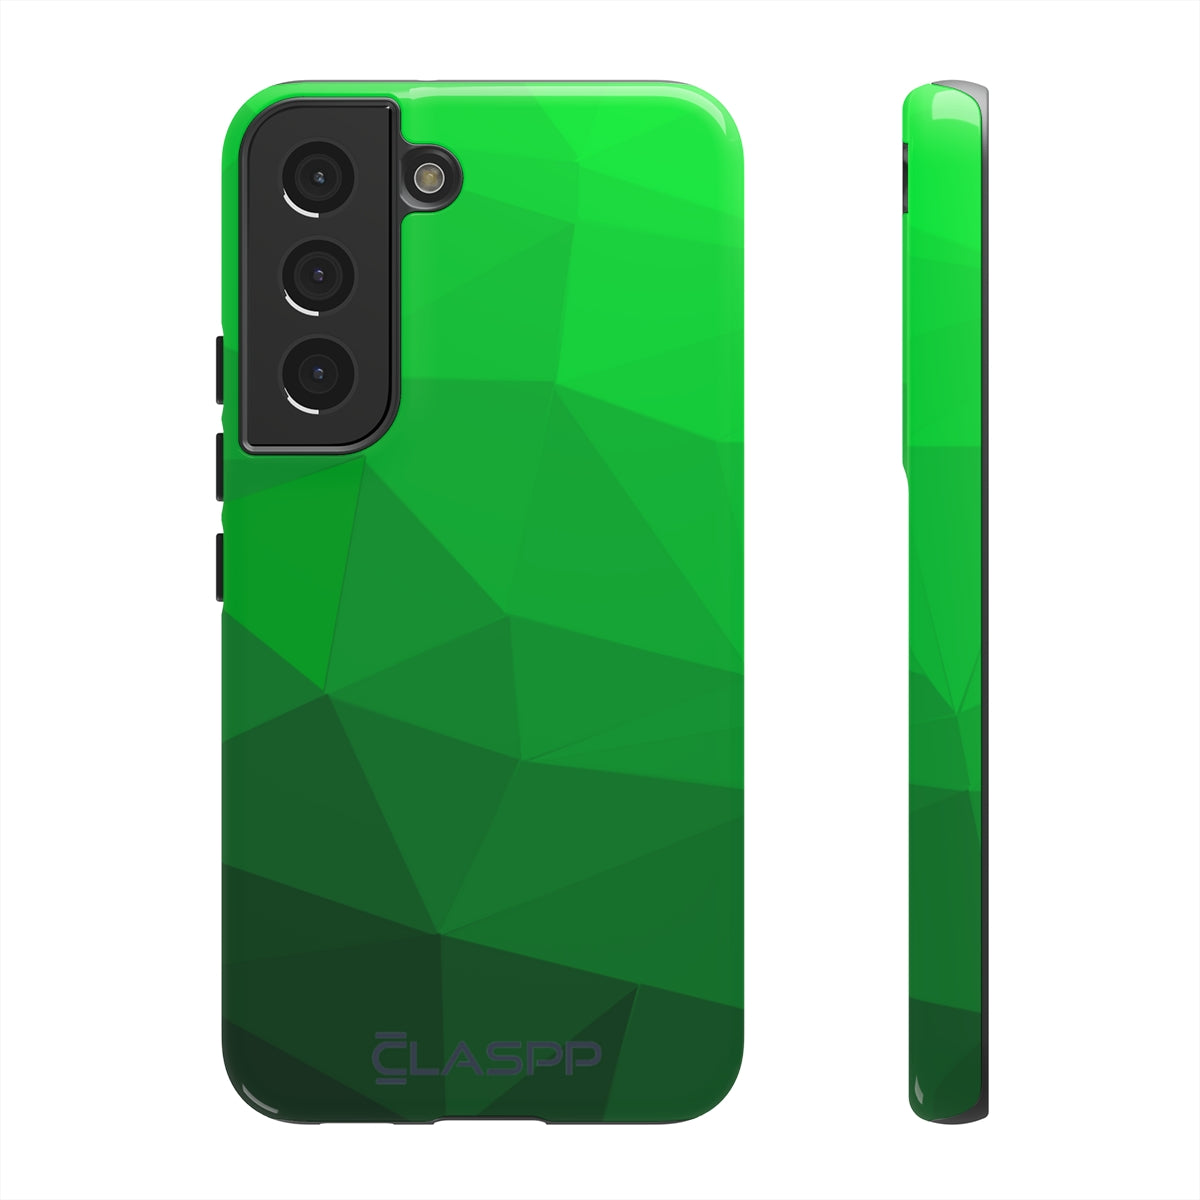 Emerald Poly | Hardshell Dual Layer